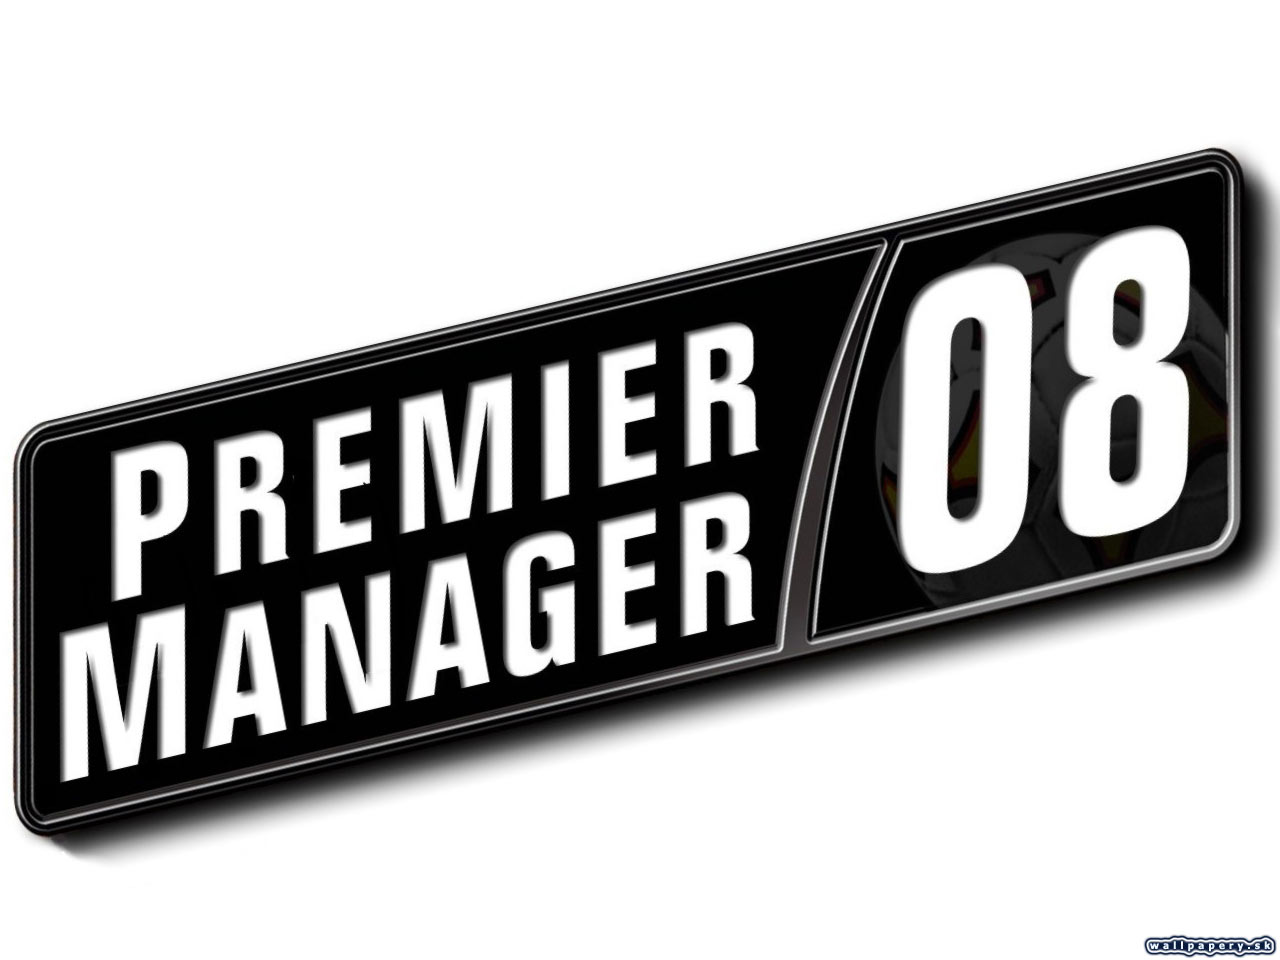 Premier Manager 08 - wallpaper 2